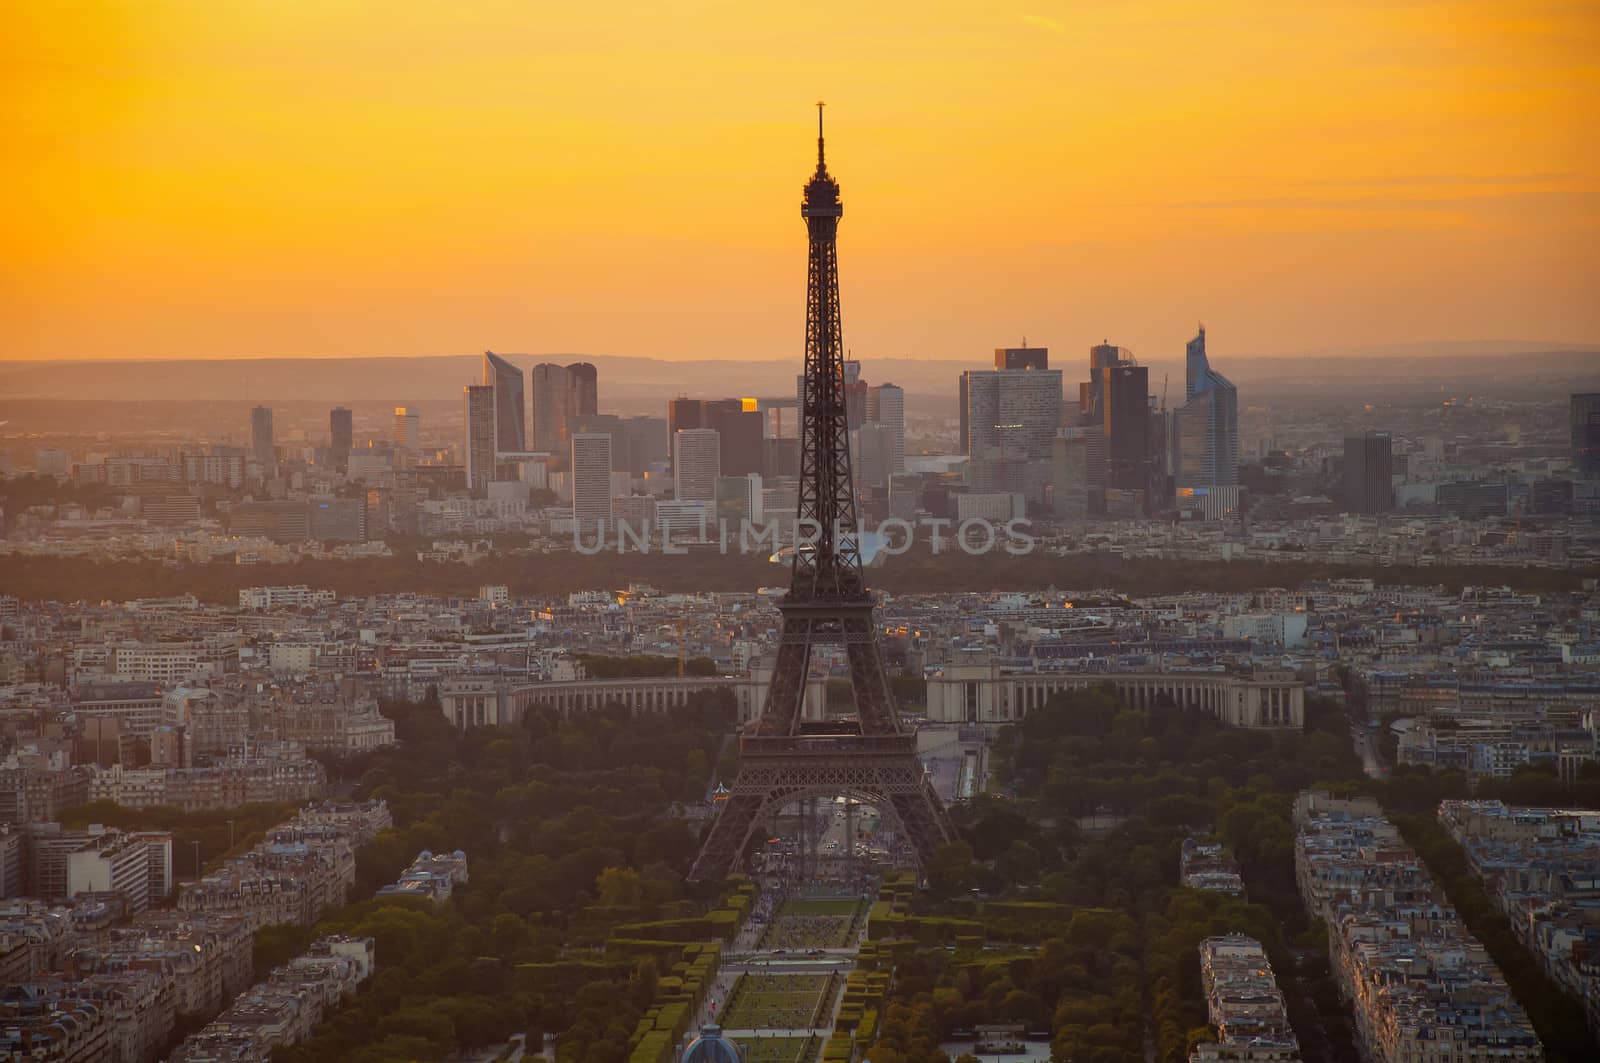 view of Paris city at sunset